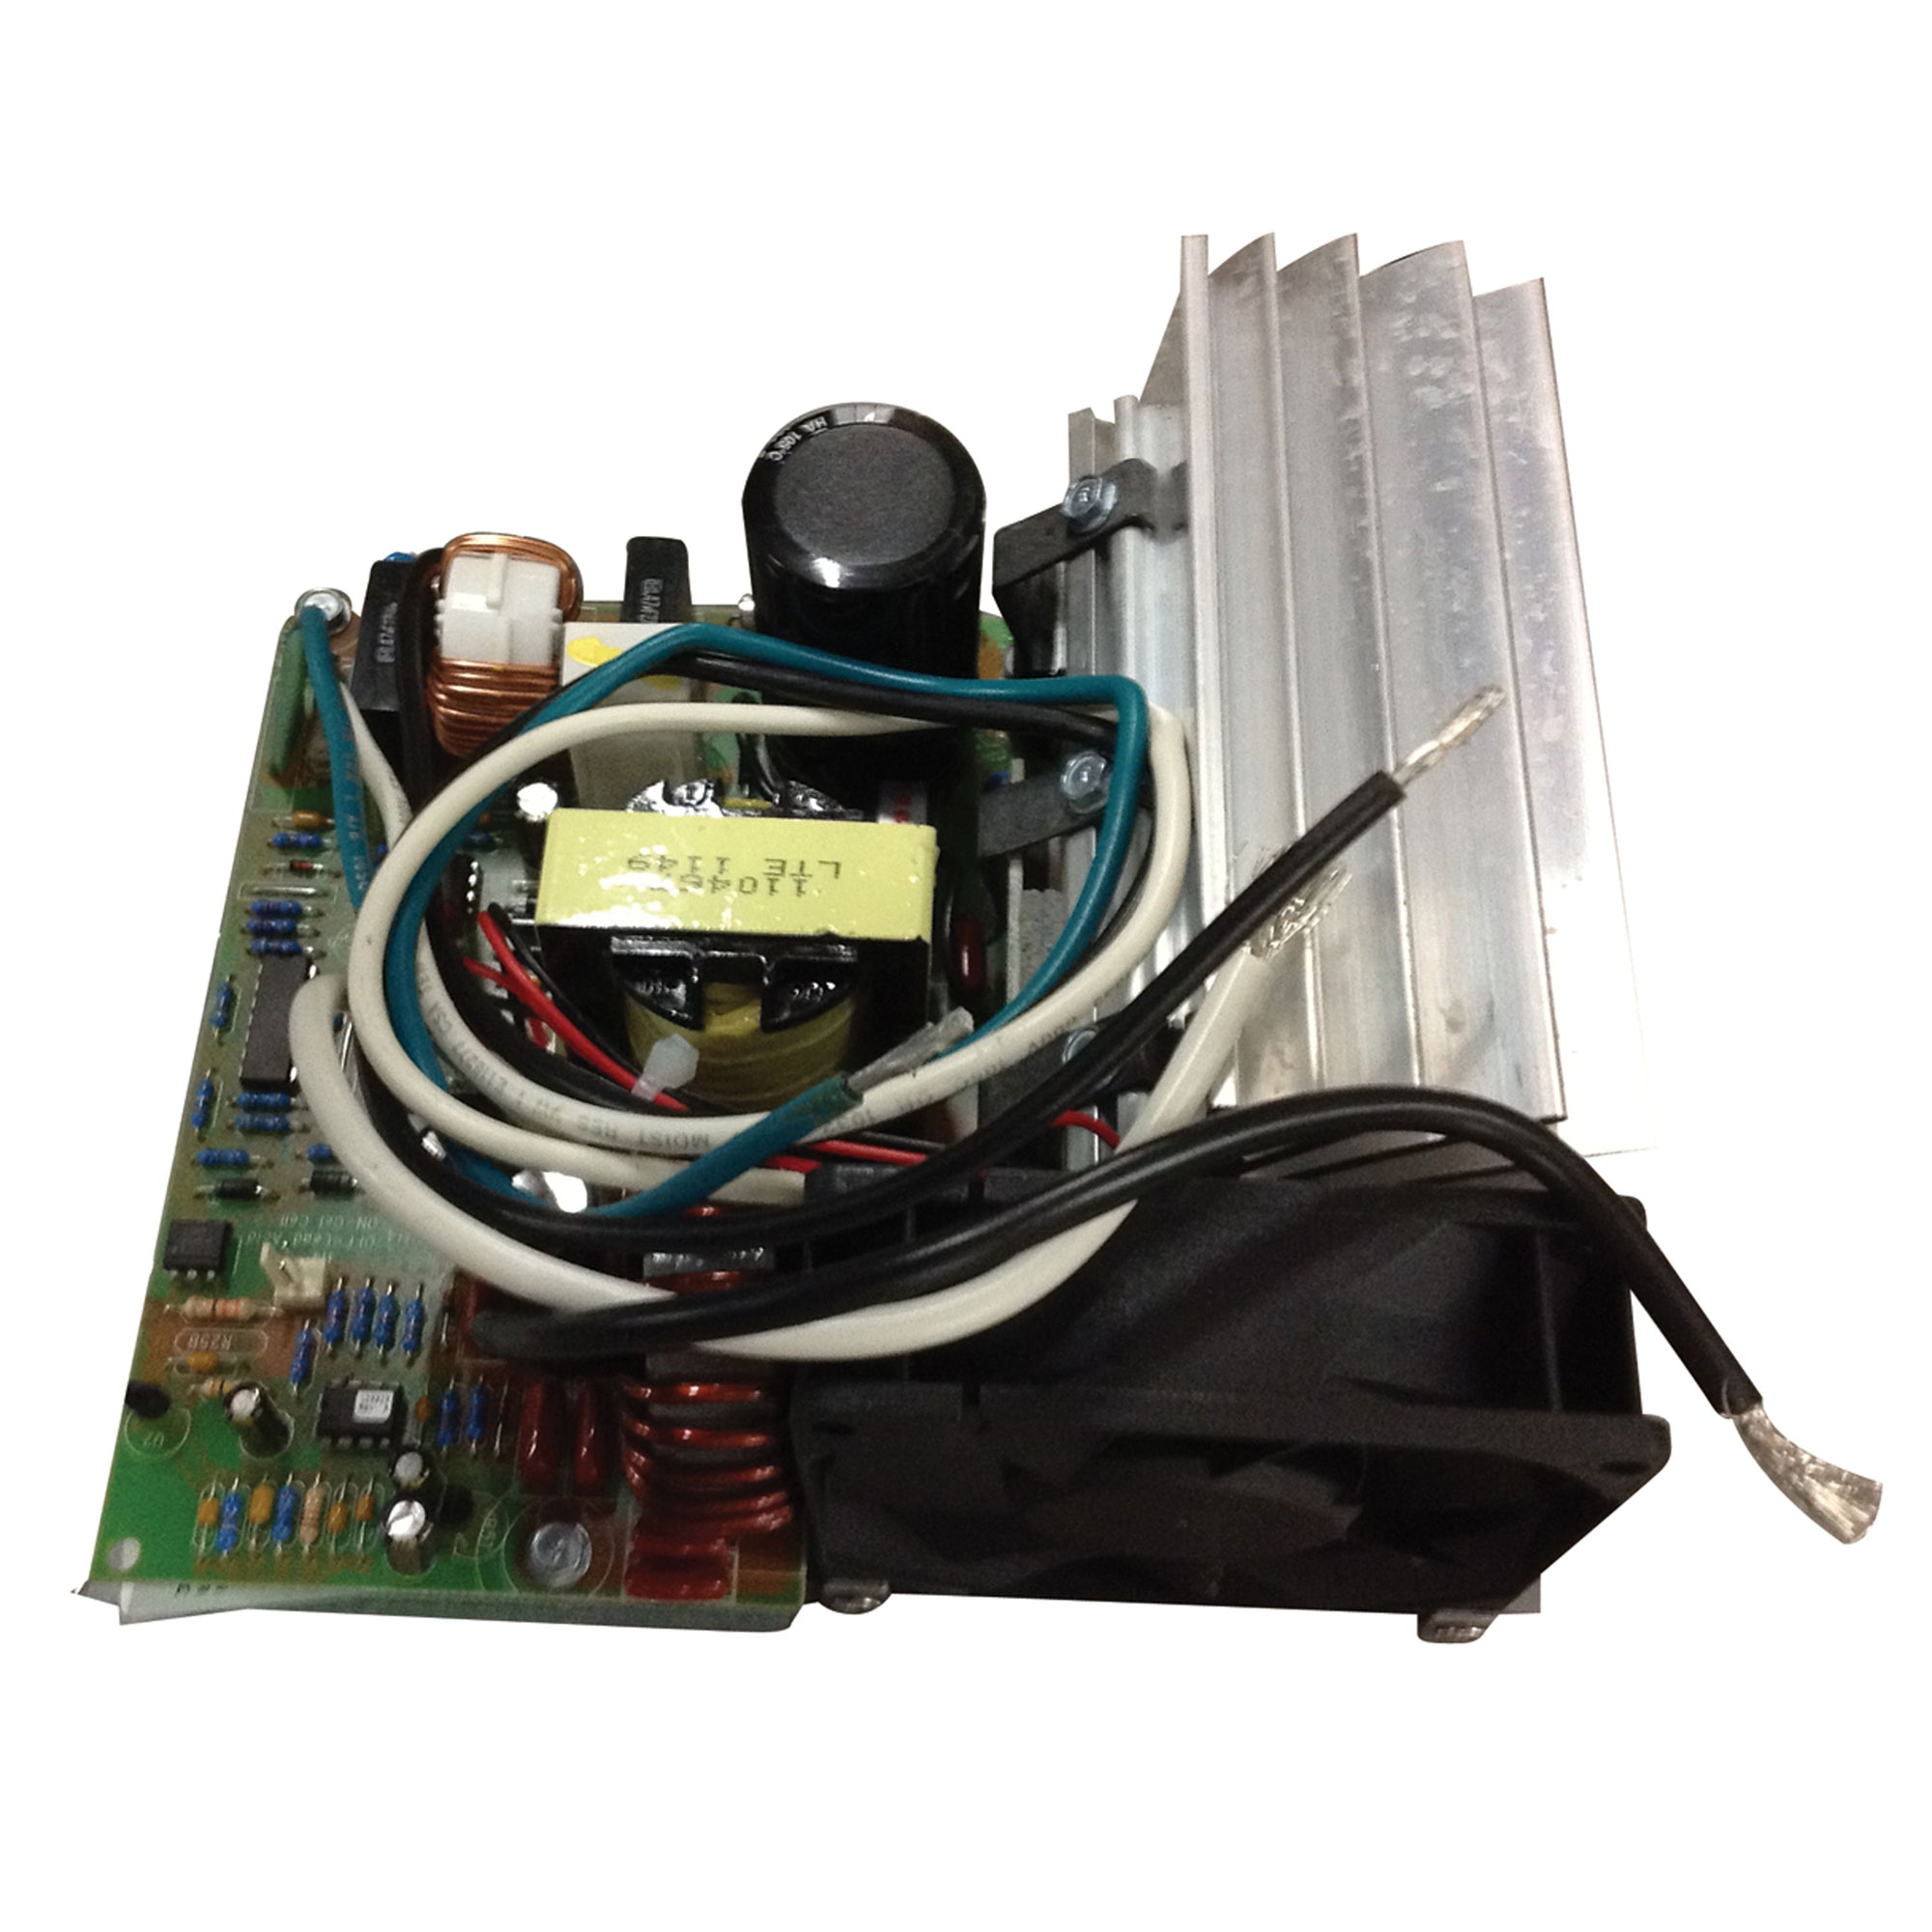 Progressive Dynamics PD4045CSV Inteli-Power 4000 Series Replacement Converter Section - 45 Amp